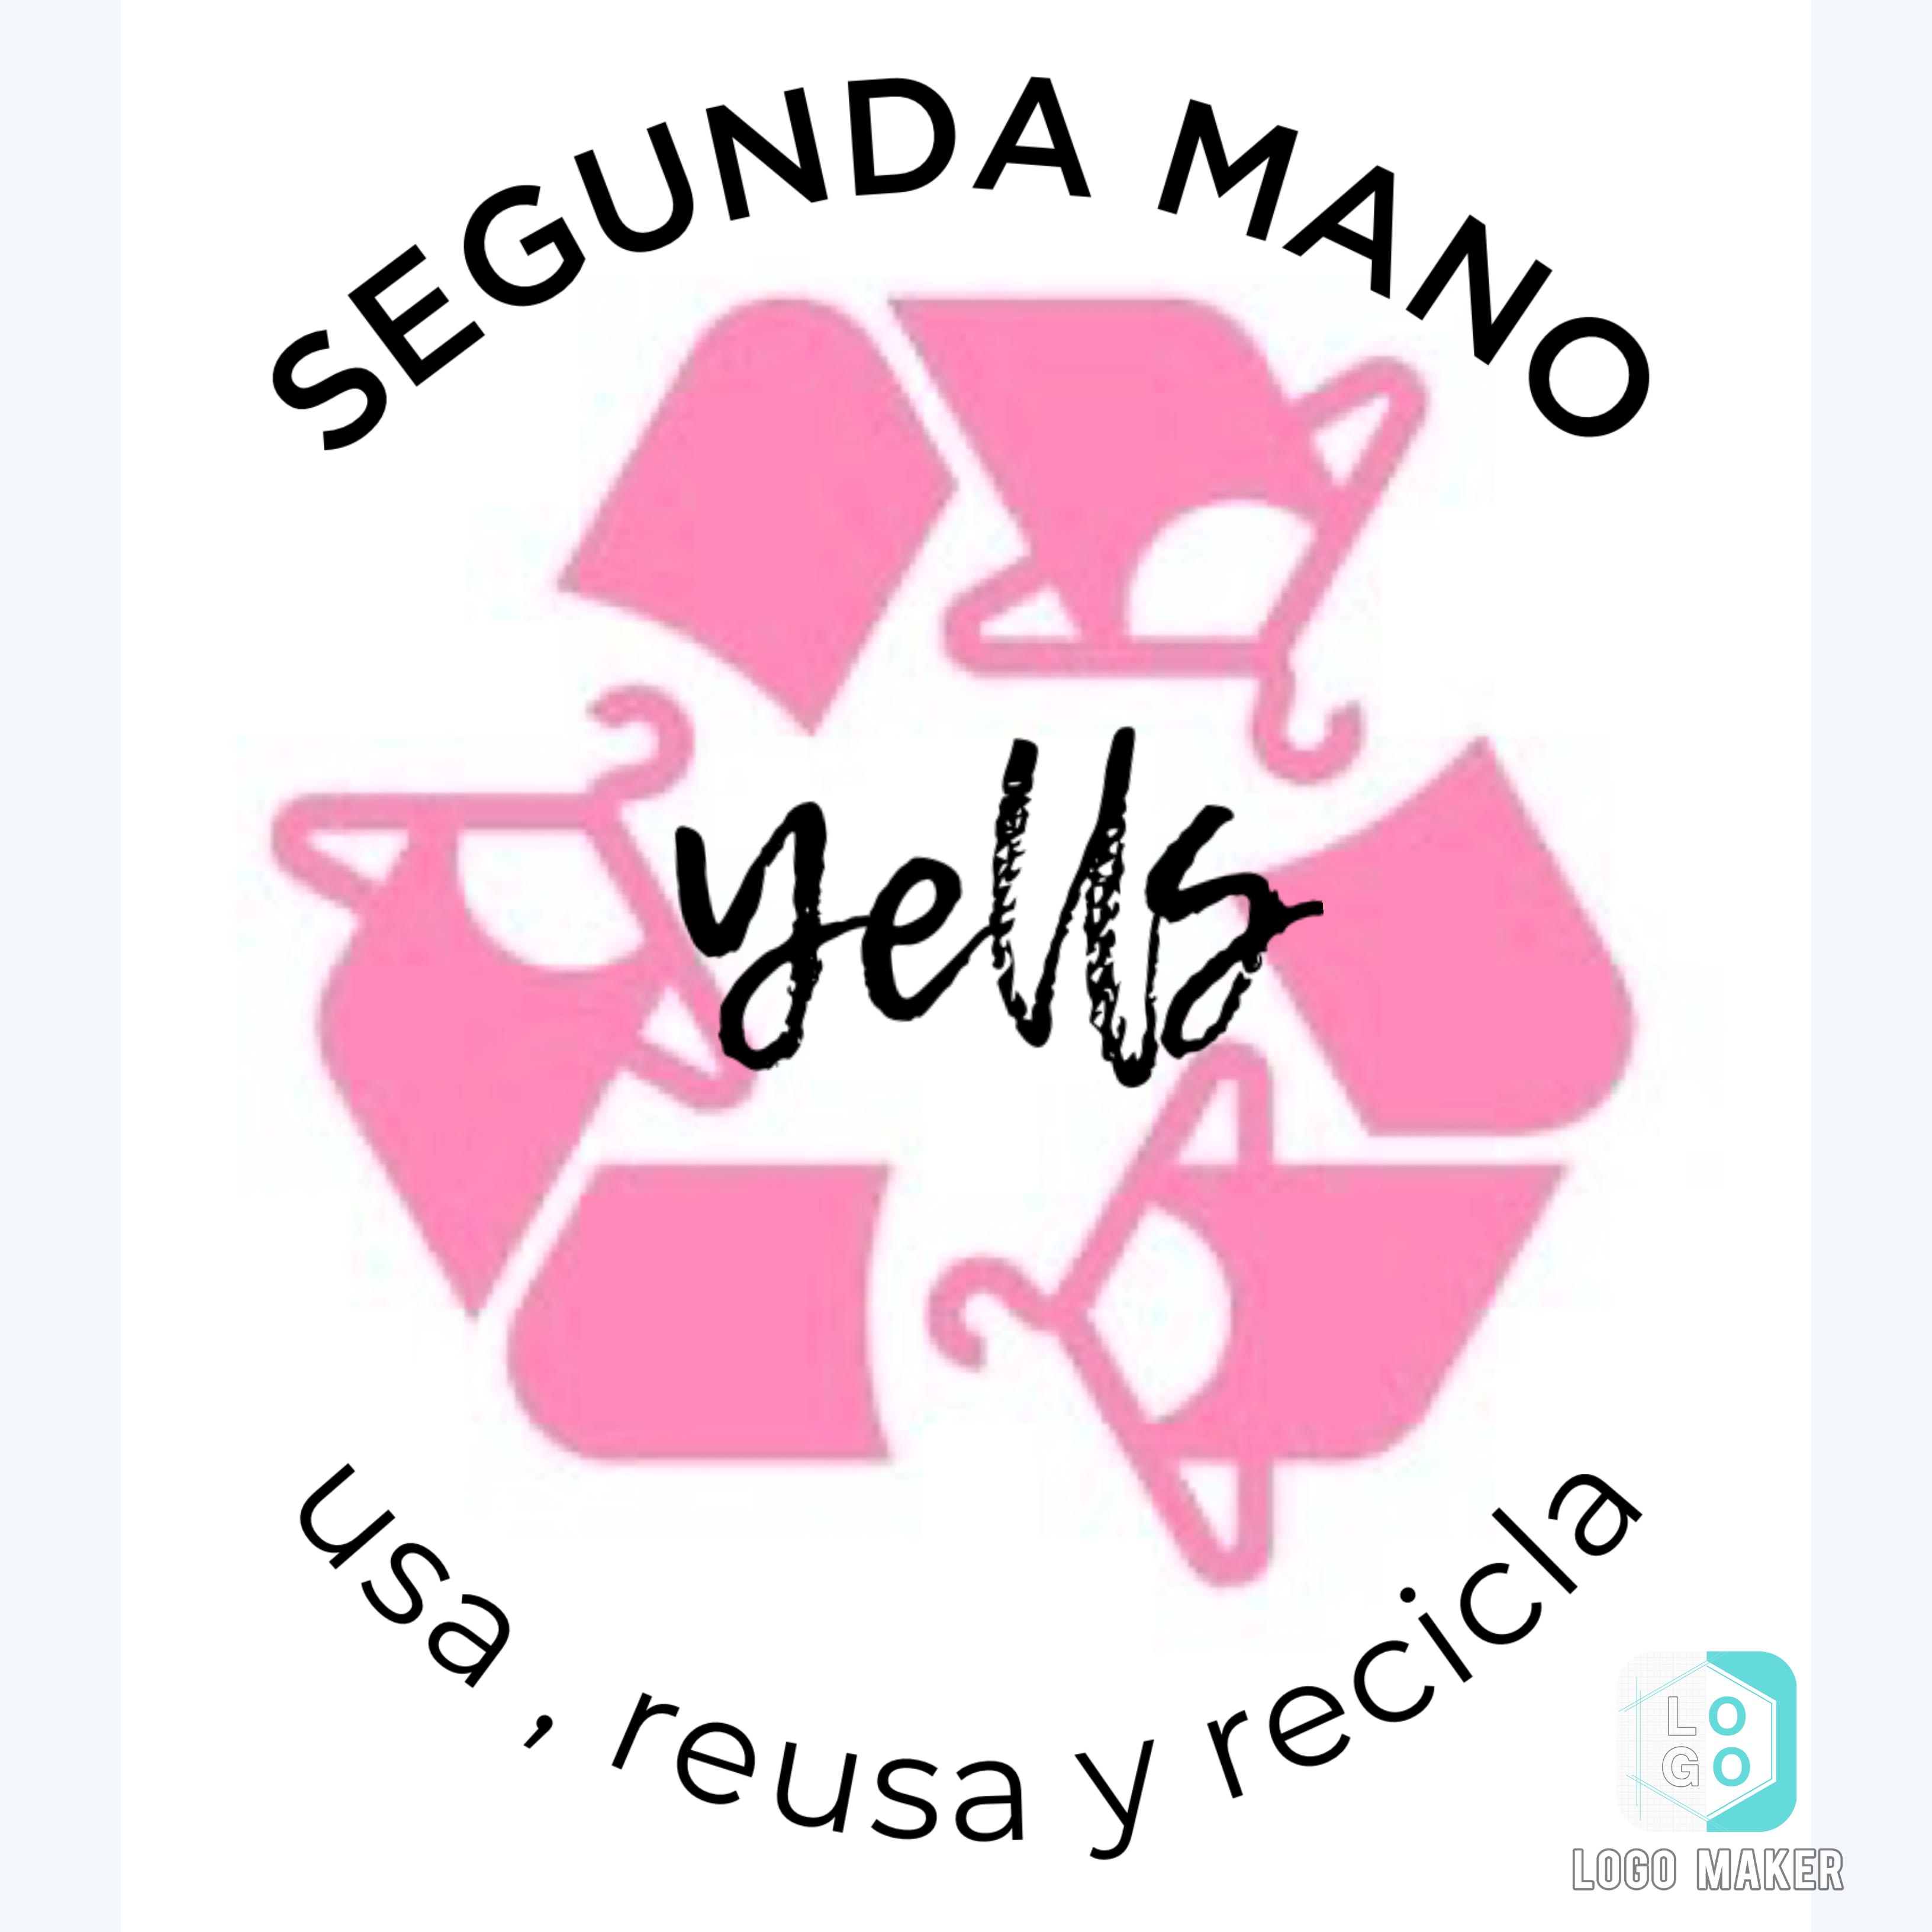 Yell’s Reuse